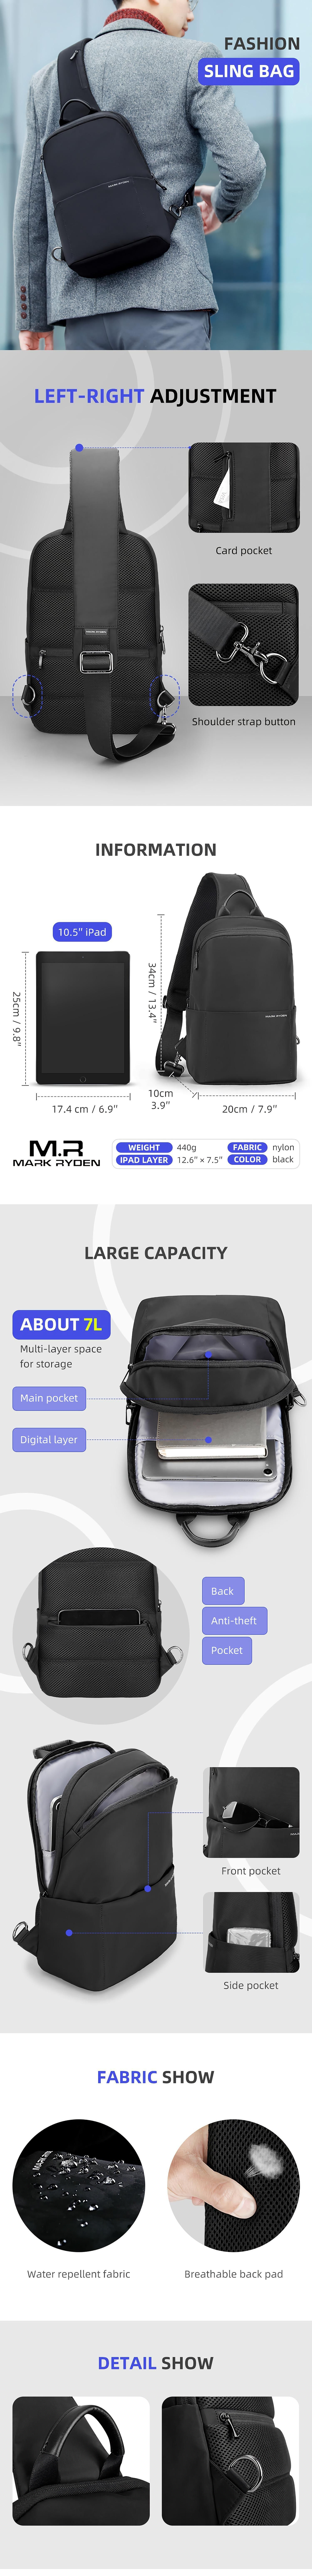 Mark-Ryden-MR7996-105-inch-Men-Cross--Laptop-Bag-Waterproof-Body-Sling-bag-1672437